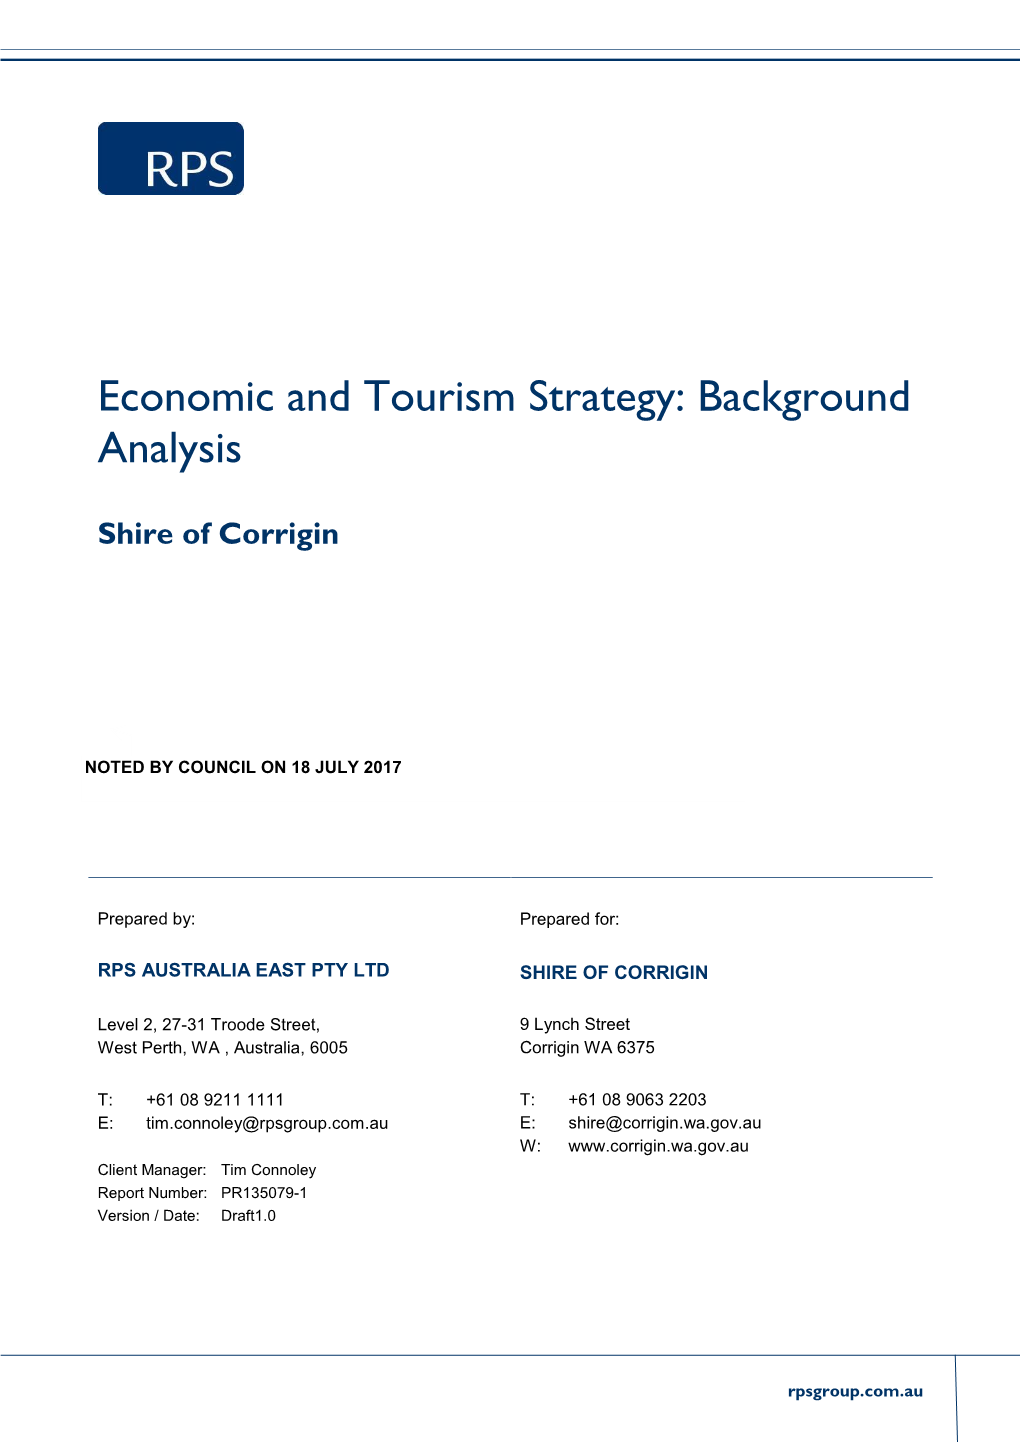 Shire of Corrigin Economics and Tourism Strategy Background